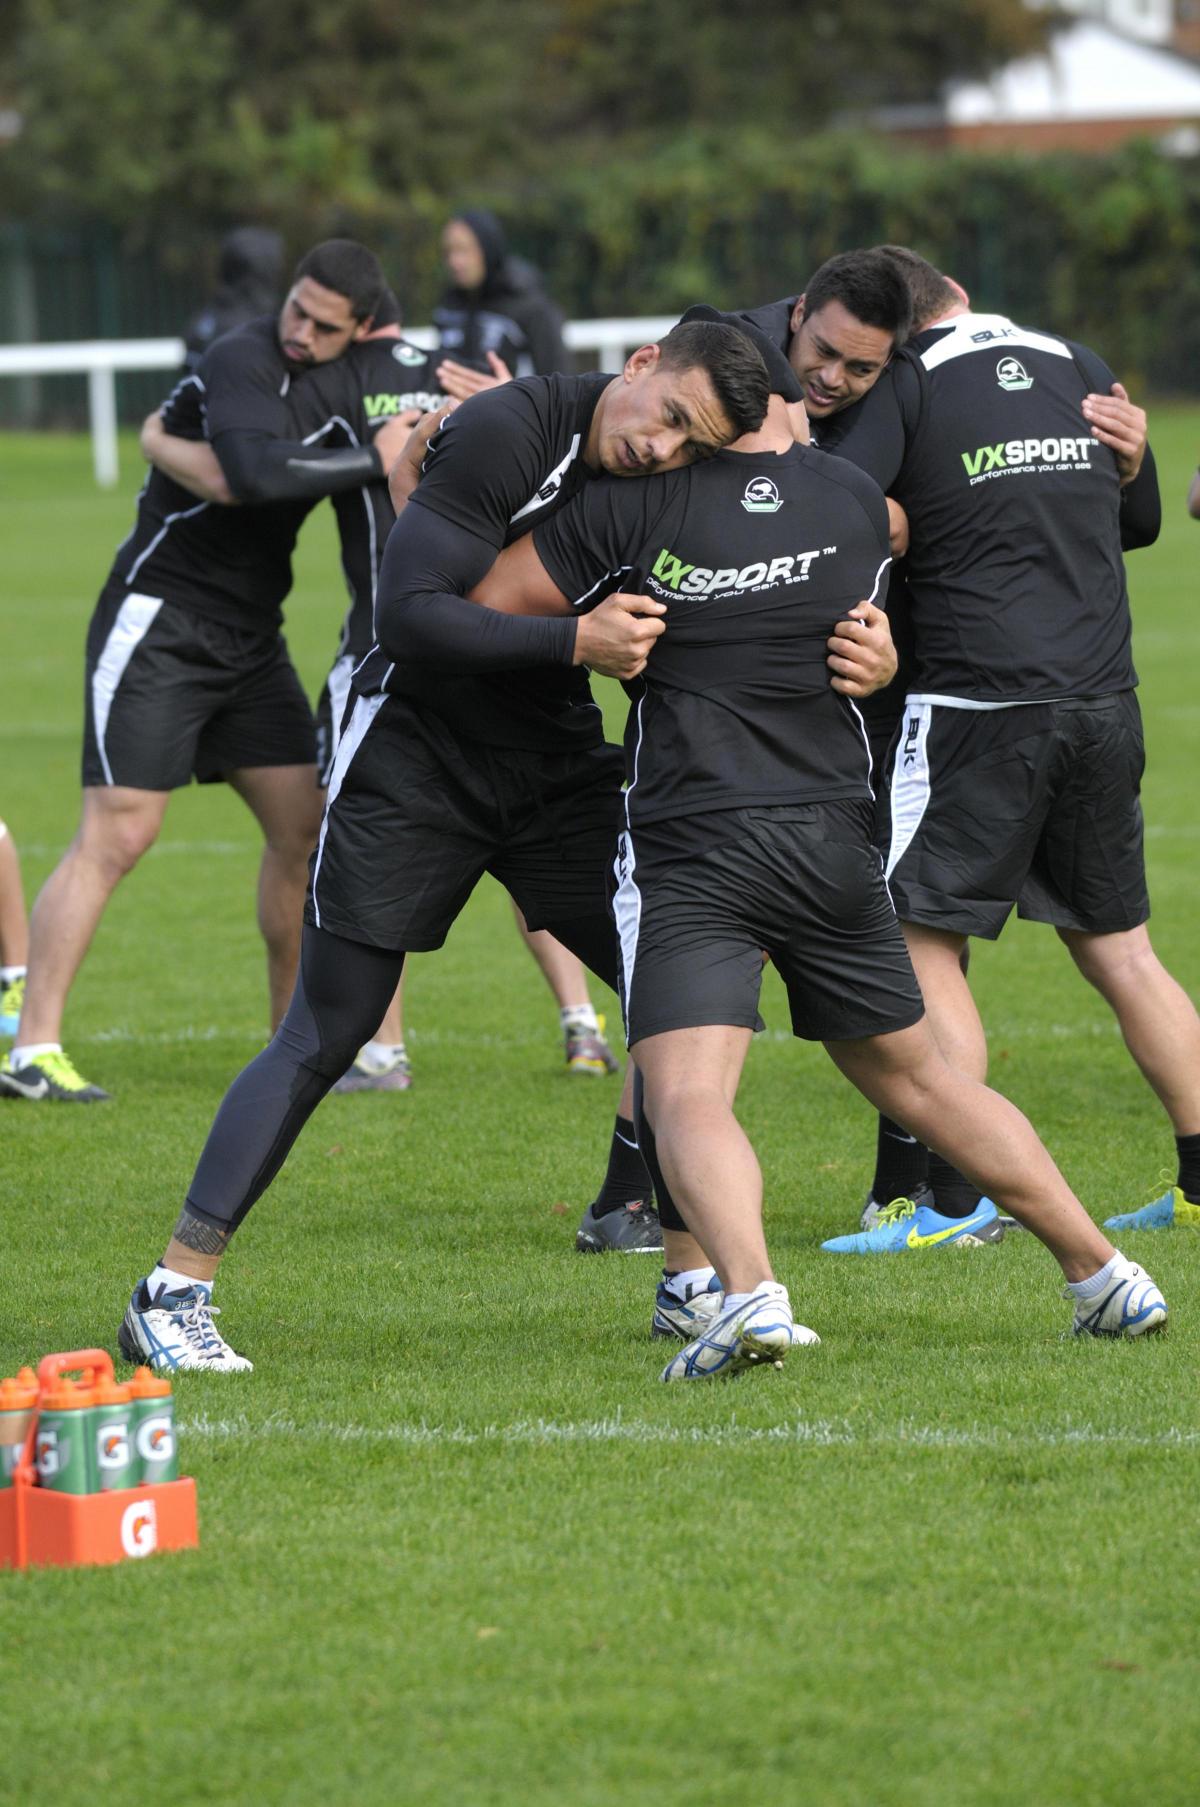 Kiwis training session in St Helens ahead of Samoa clash in Warrington